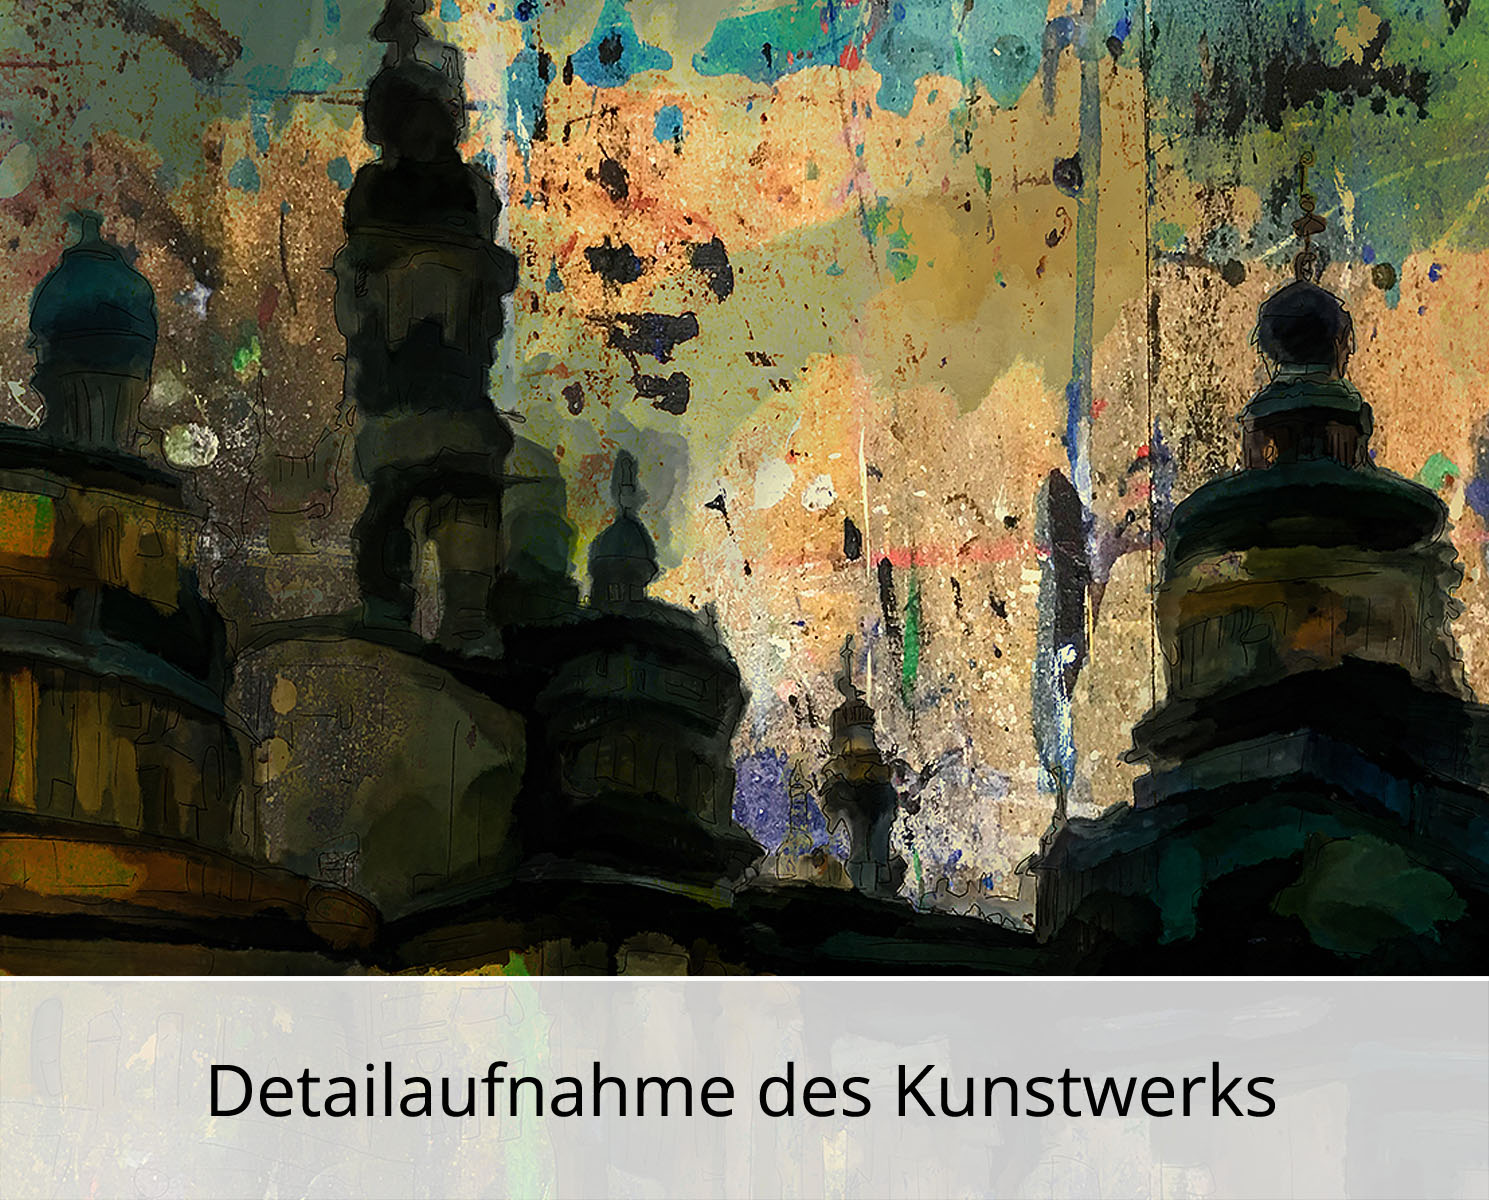 H. Mühlbauer-Gardemin: "Stadt an der Elbe", Moderne Pop Art, Original/serielles Unikat